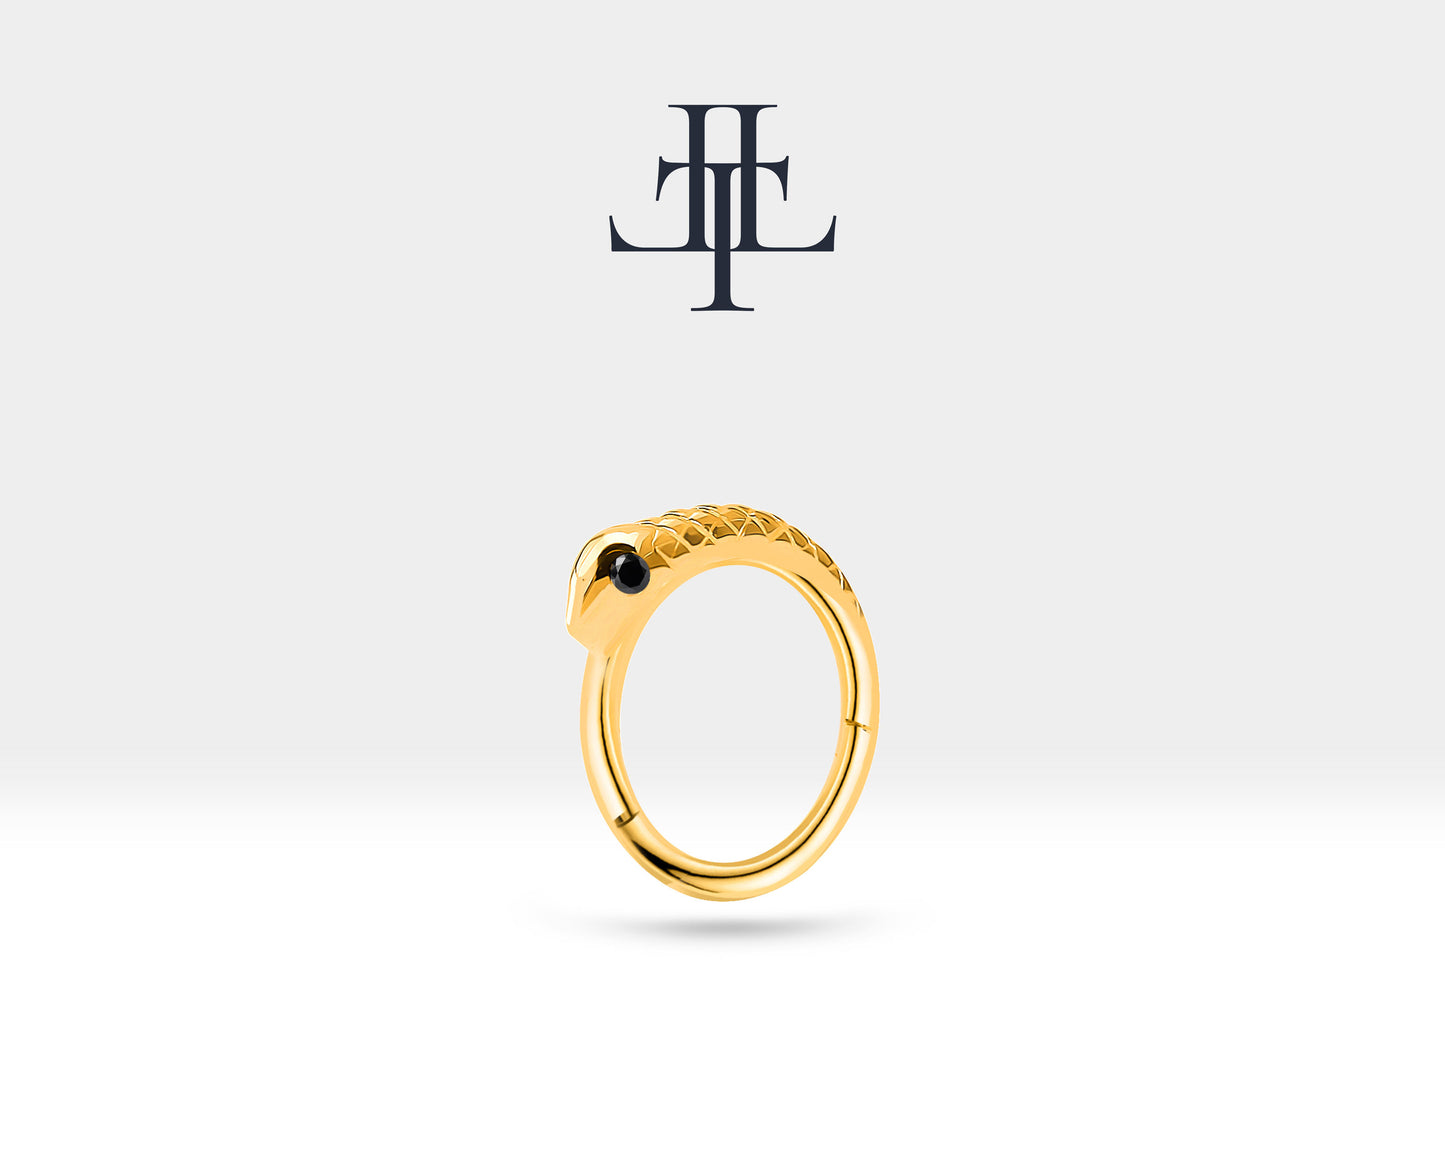 Cartilage Hoop Snake Design Black Diamond Clicker Piercing,14K Yellow Solid Gold,16G(1.2)